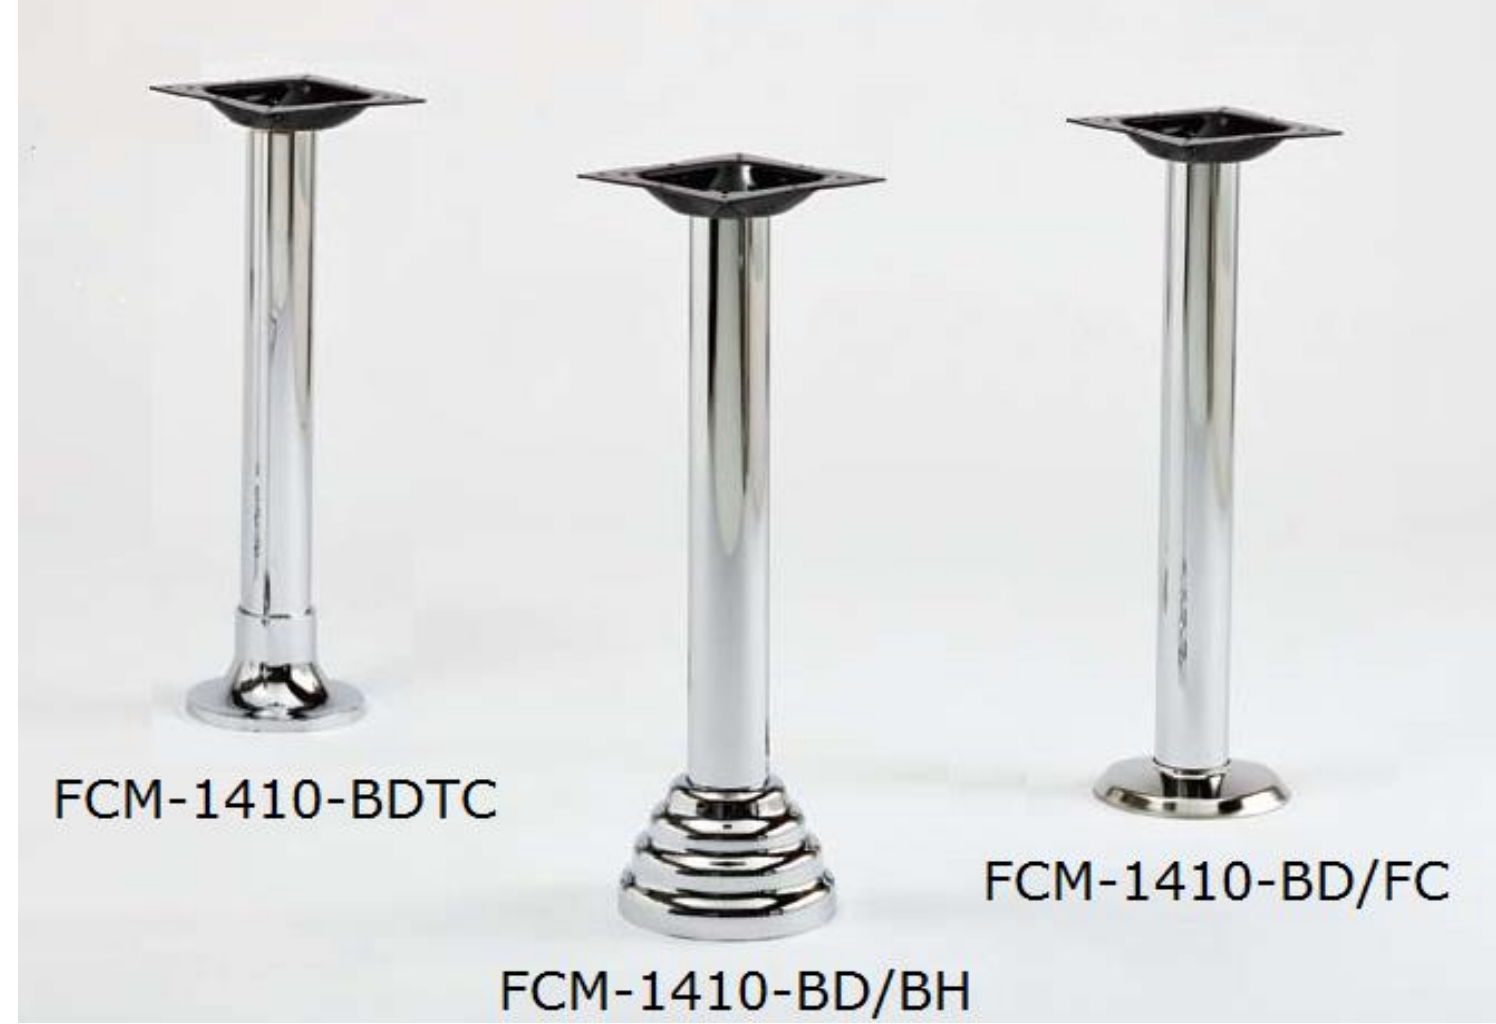 FCM-1410 Bolt Down Tube Legs